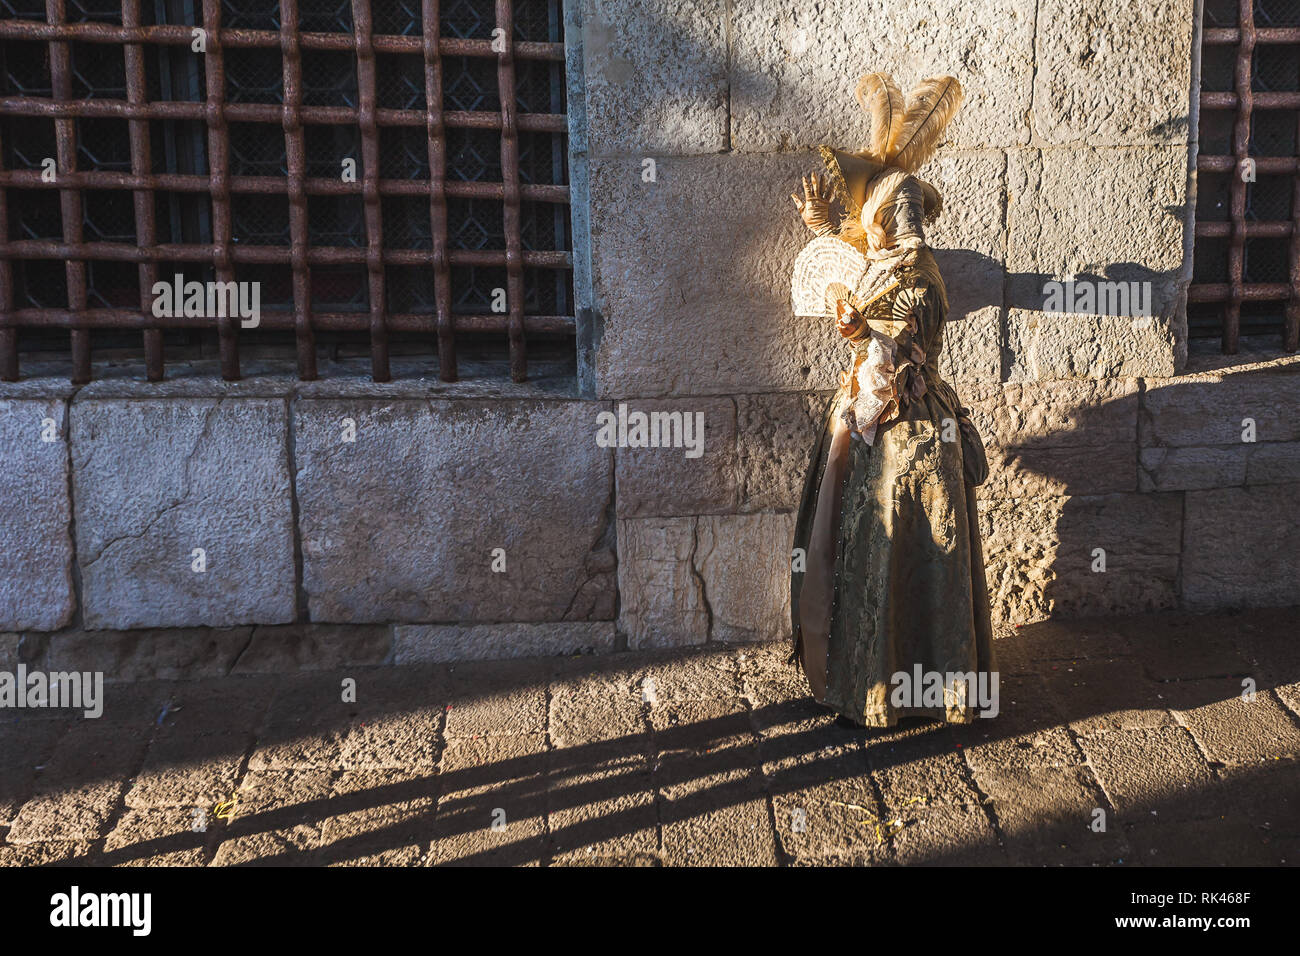 Venedig, Italien - 10 Februar 2018: Karneval Maske in Gold gekleidet, lehnte sich gegen die Gefängnisse Wand Stockfoto